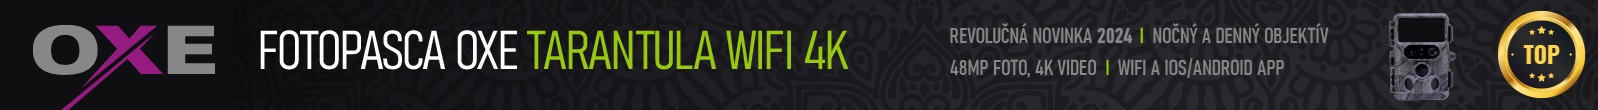 Fotopasca OXE Tarantula WiFi 4K